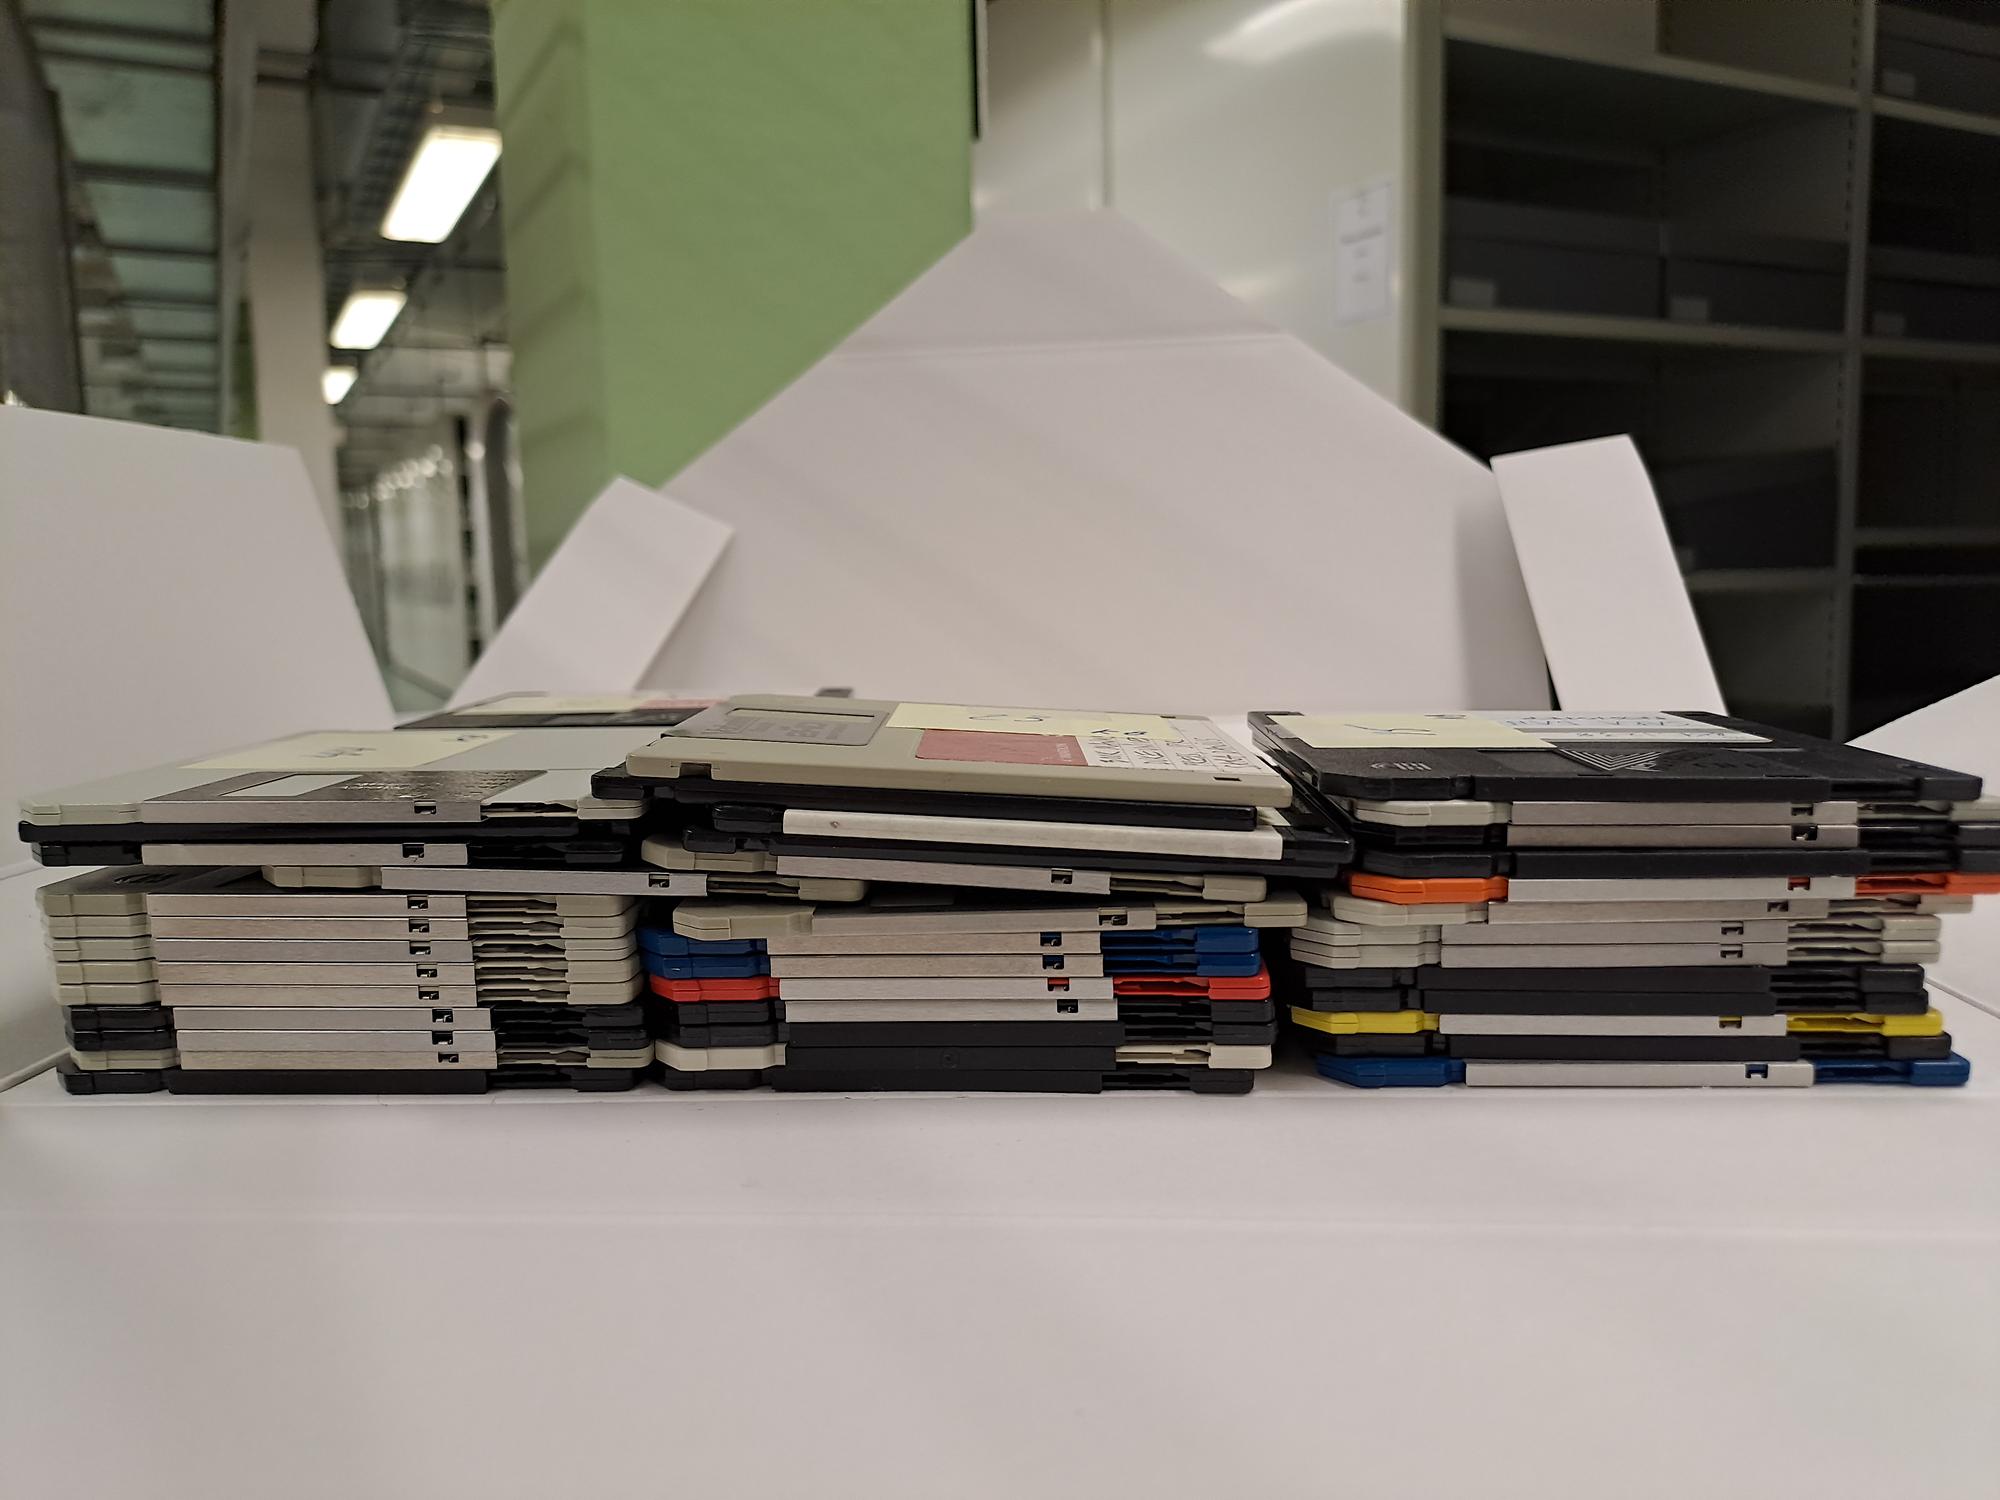 Färgfotografi av tre små travar med gamla disketter som ligger i en uppvikt arkivkapsel.